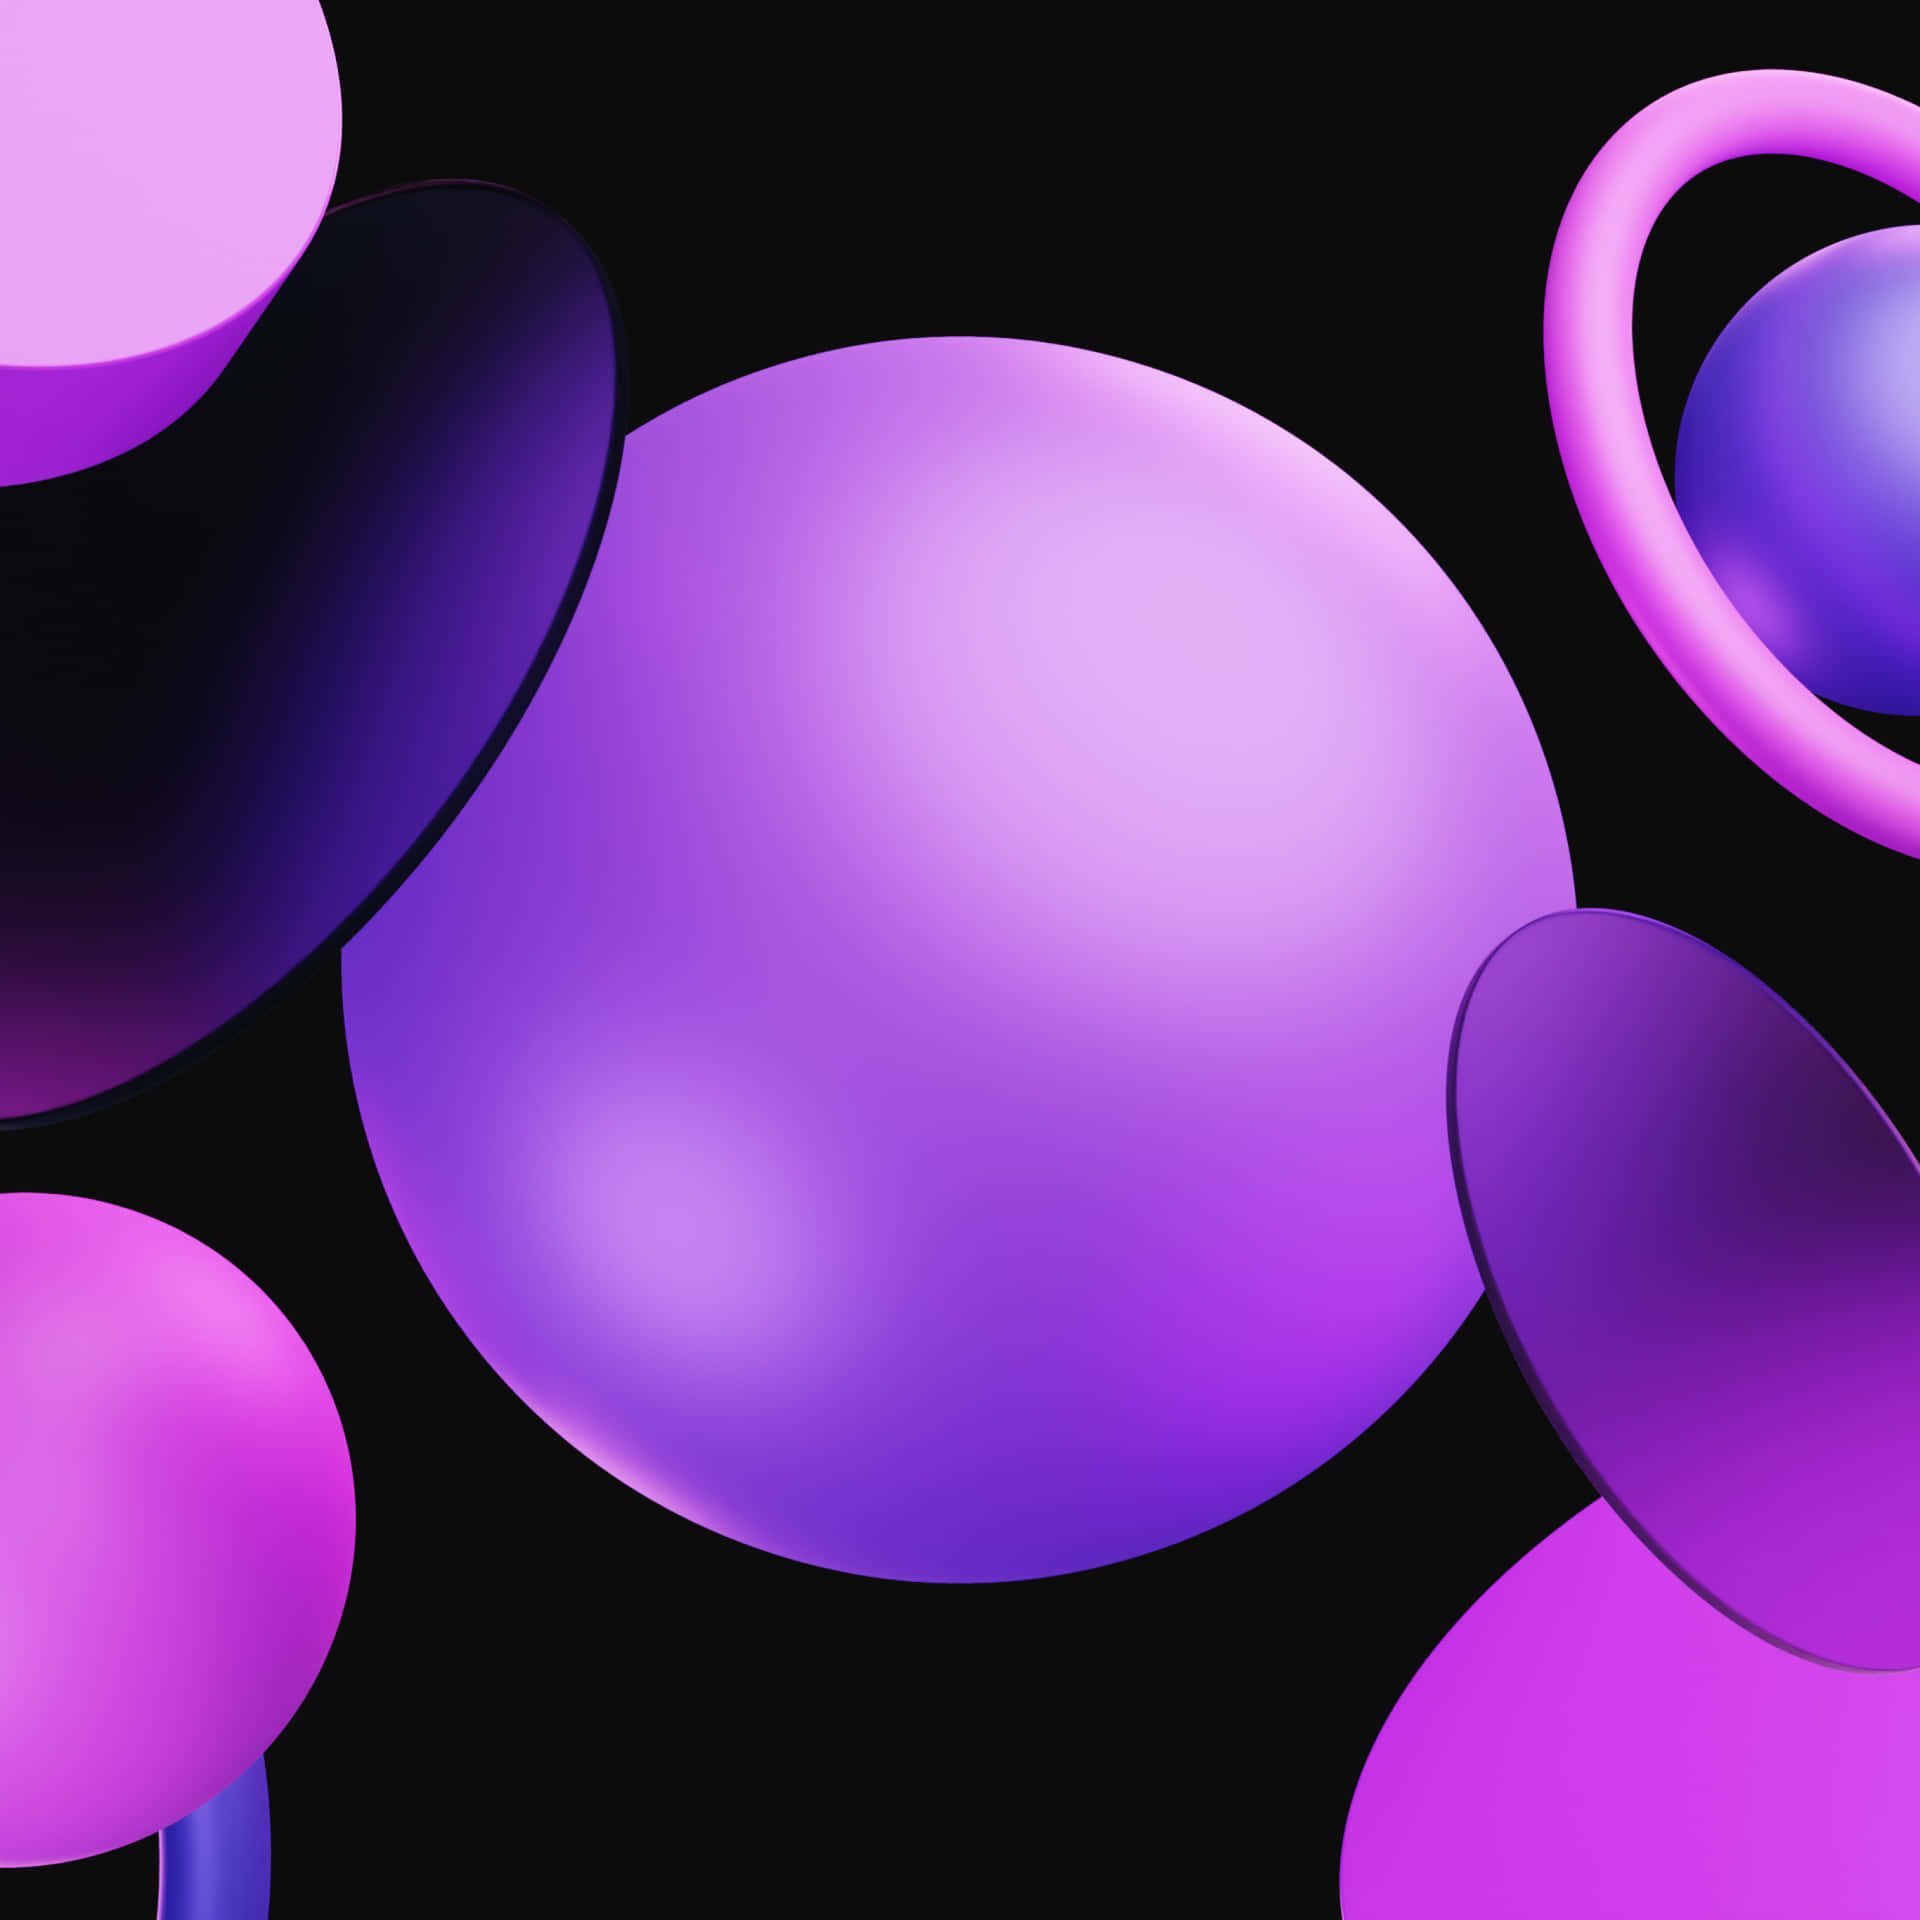 Purple Oval Shapes Surrounding A Circle Wallpaper